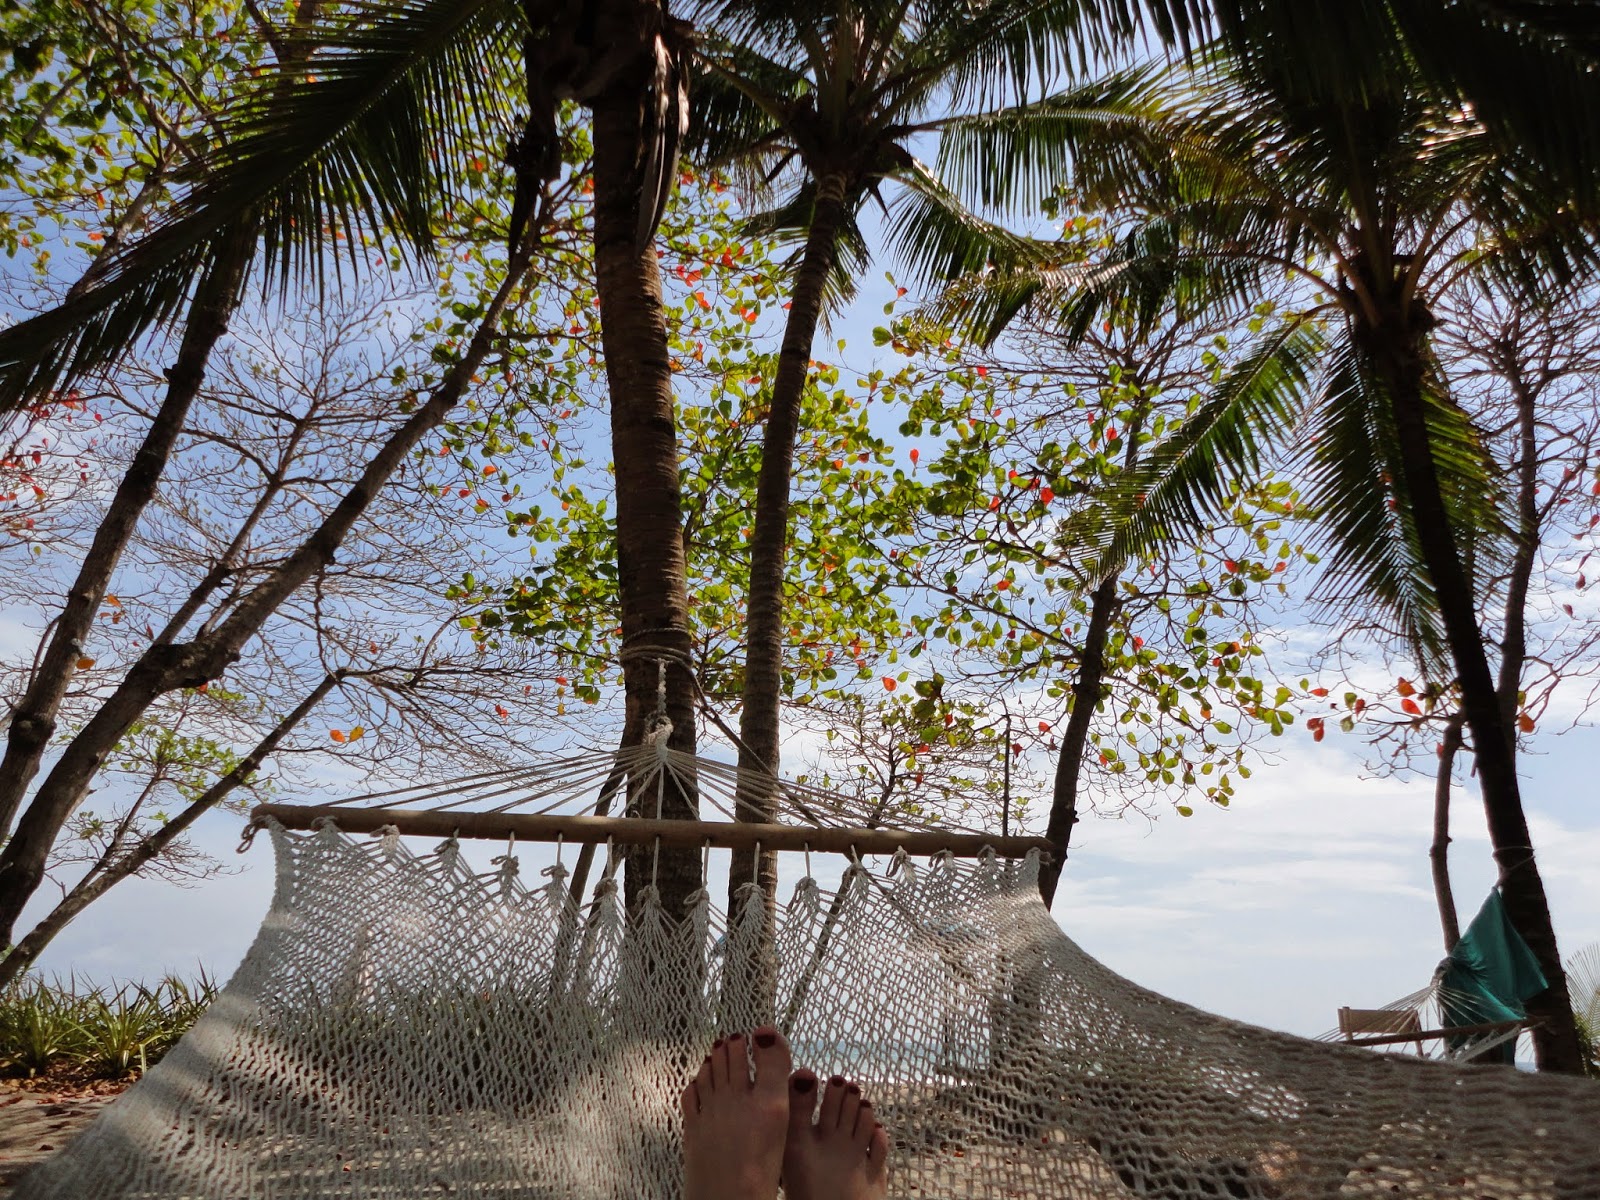 a hammock under palm trees